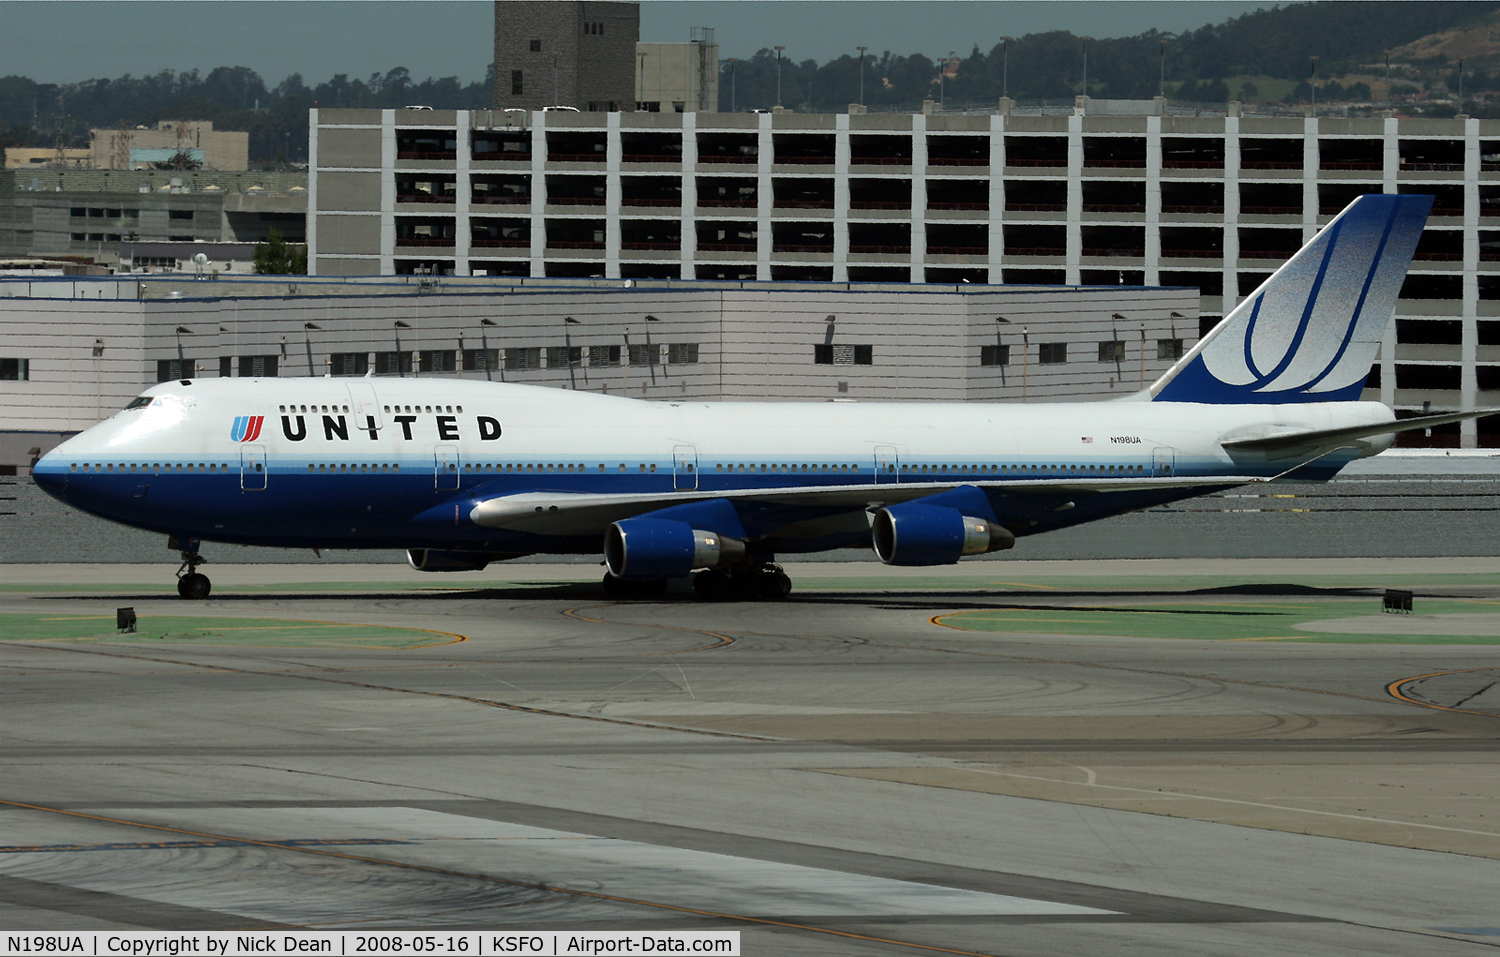 N198UA, 1997 Boeing 747-422 C/N 28716, Arriving to take me on the 15th annual Europe trip (15H Upper Deck)